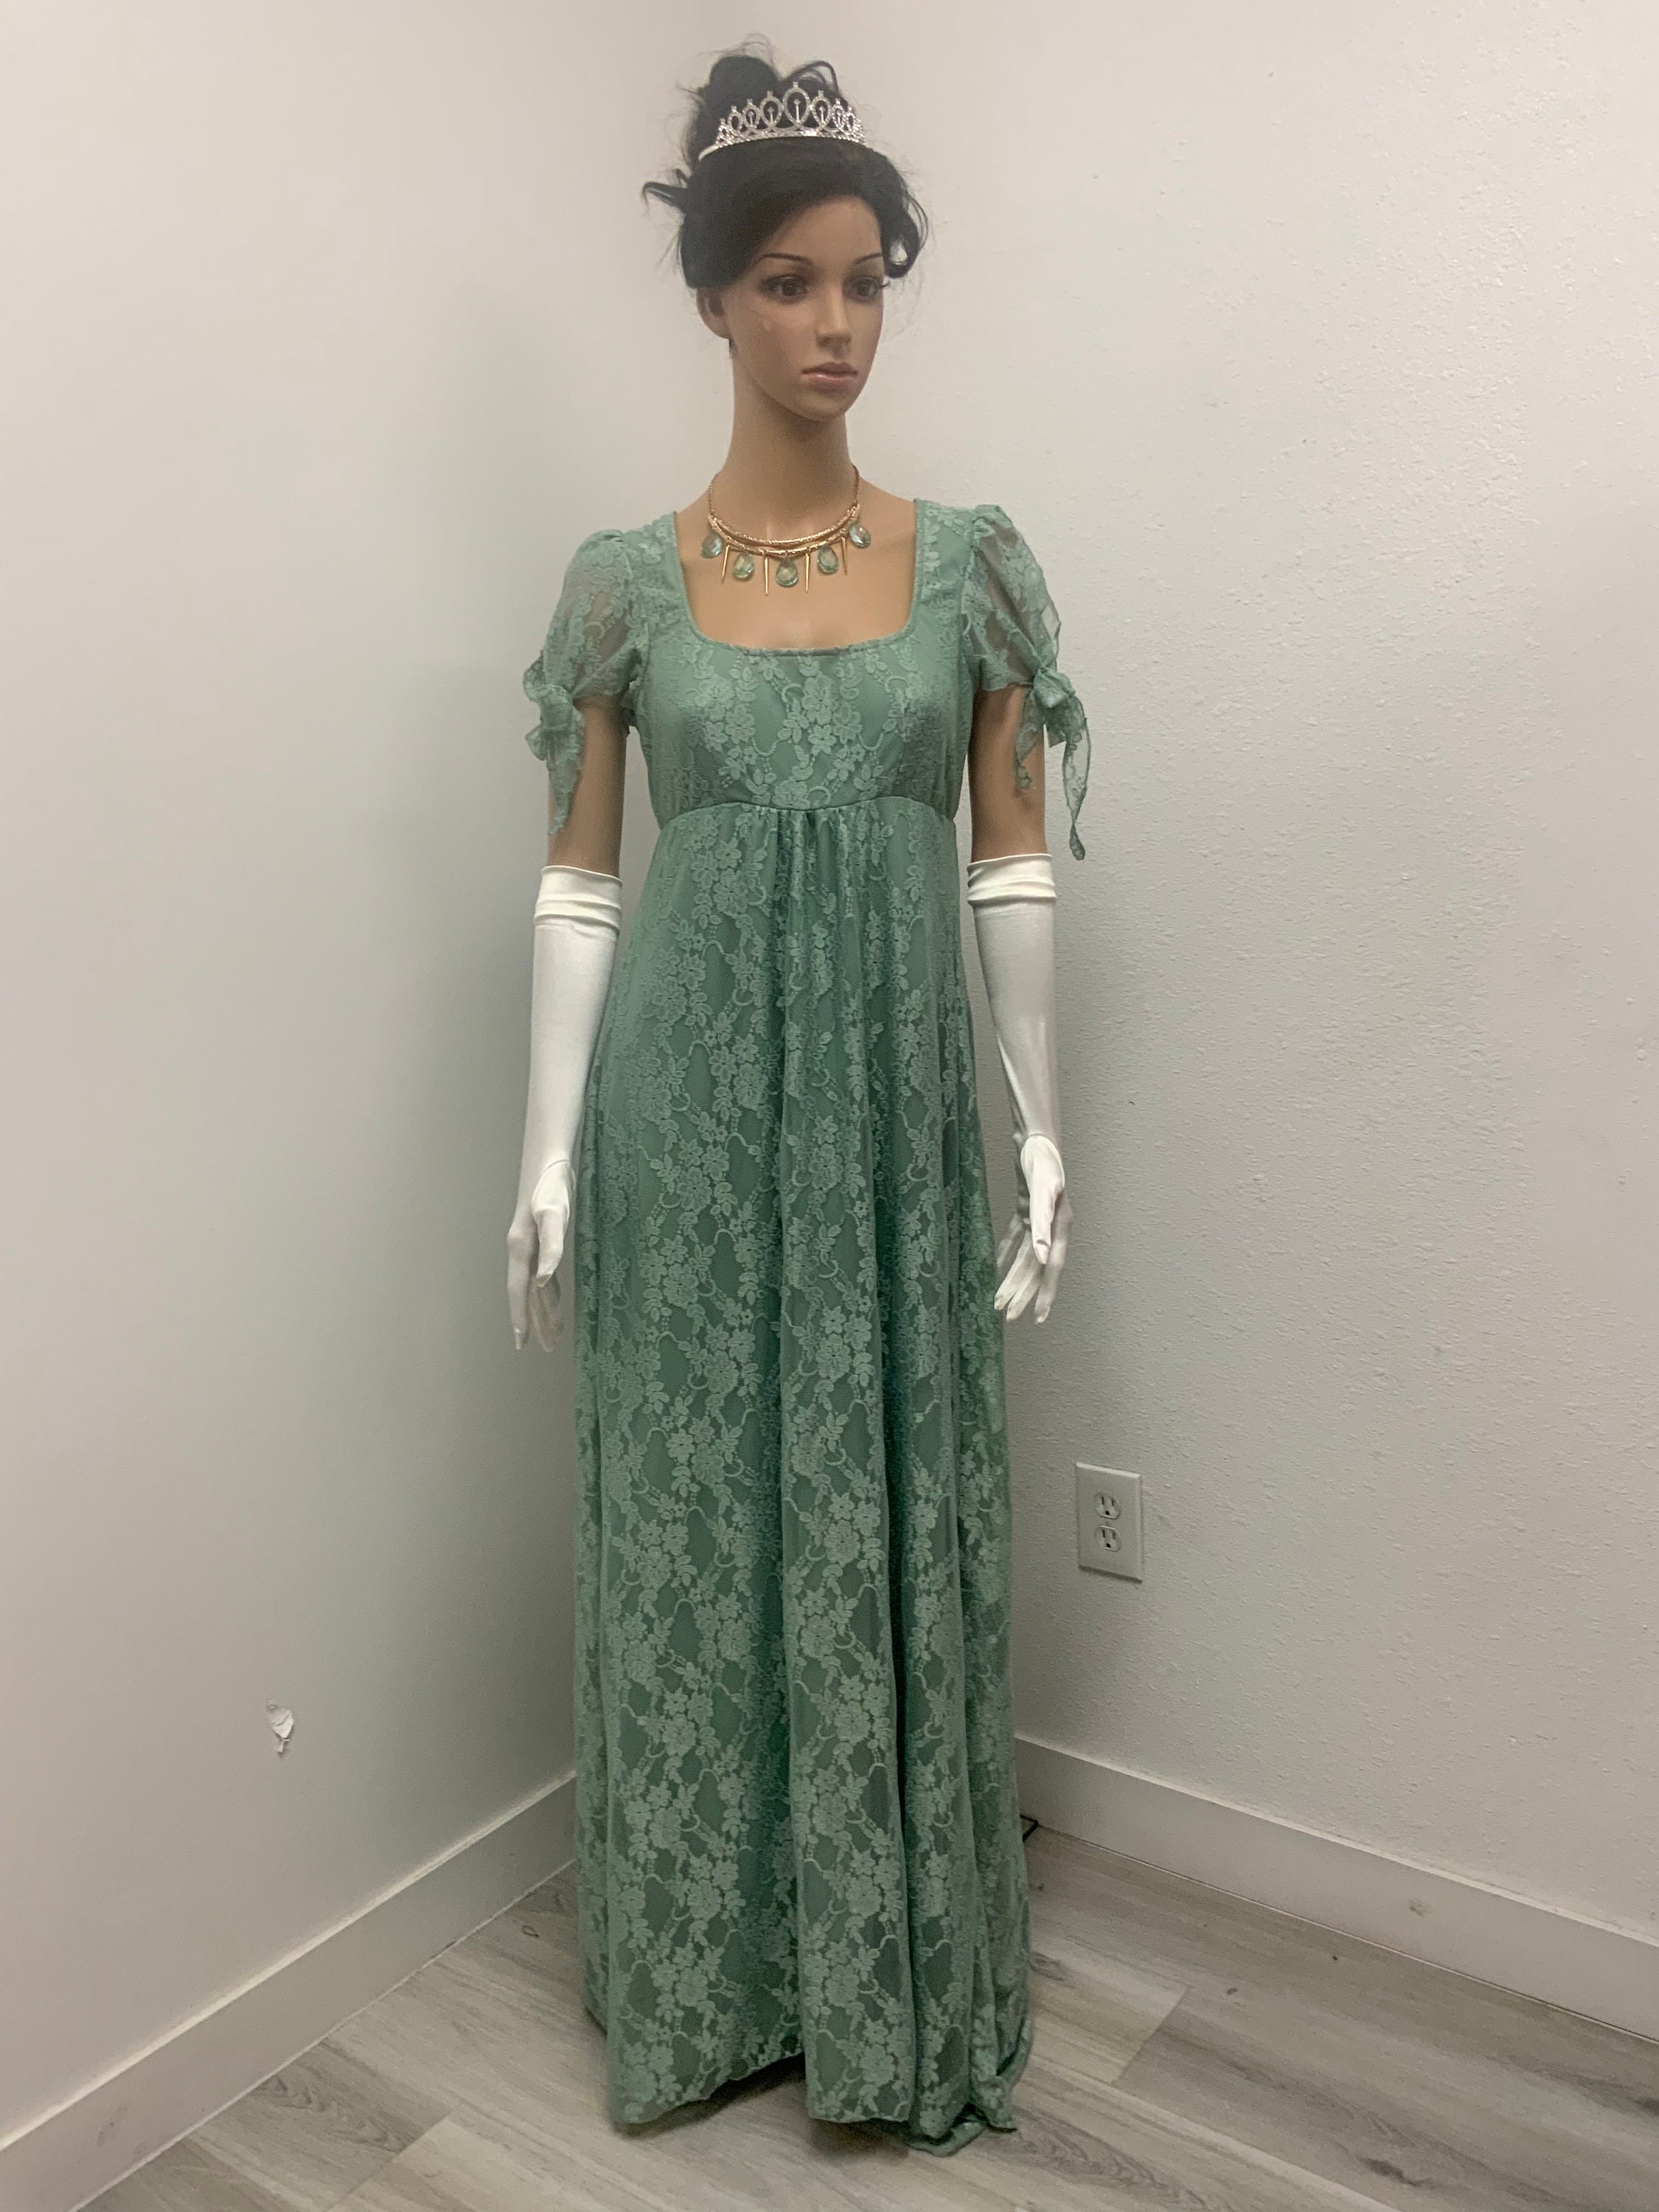 Lace Regency Era Dress/gown/costume Bridgerton Inspired 